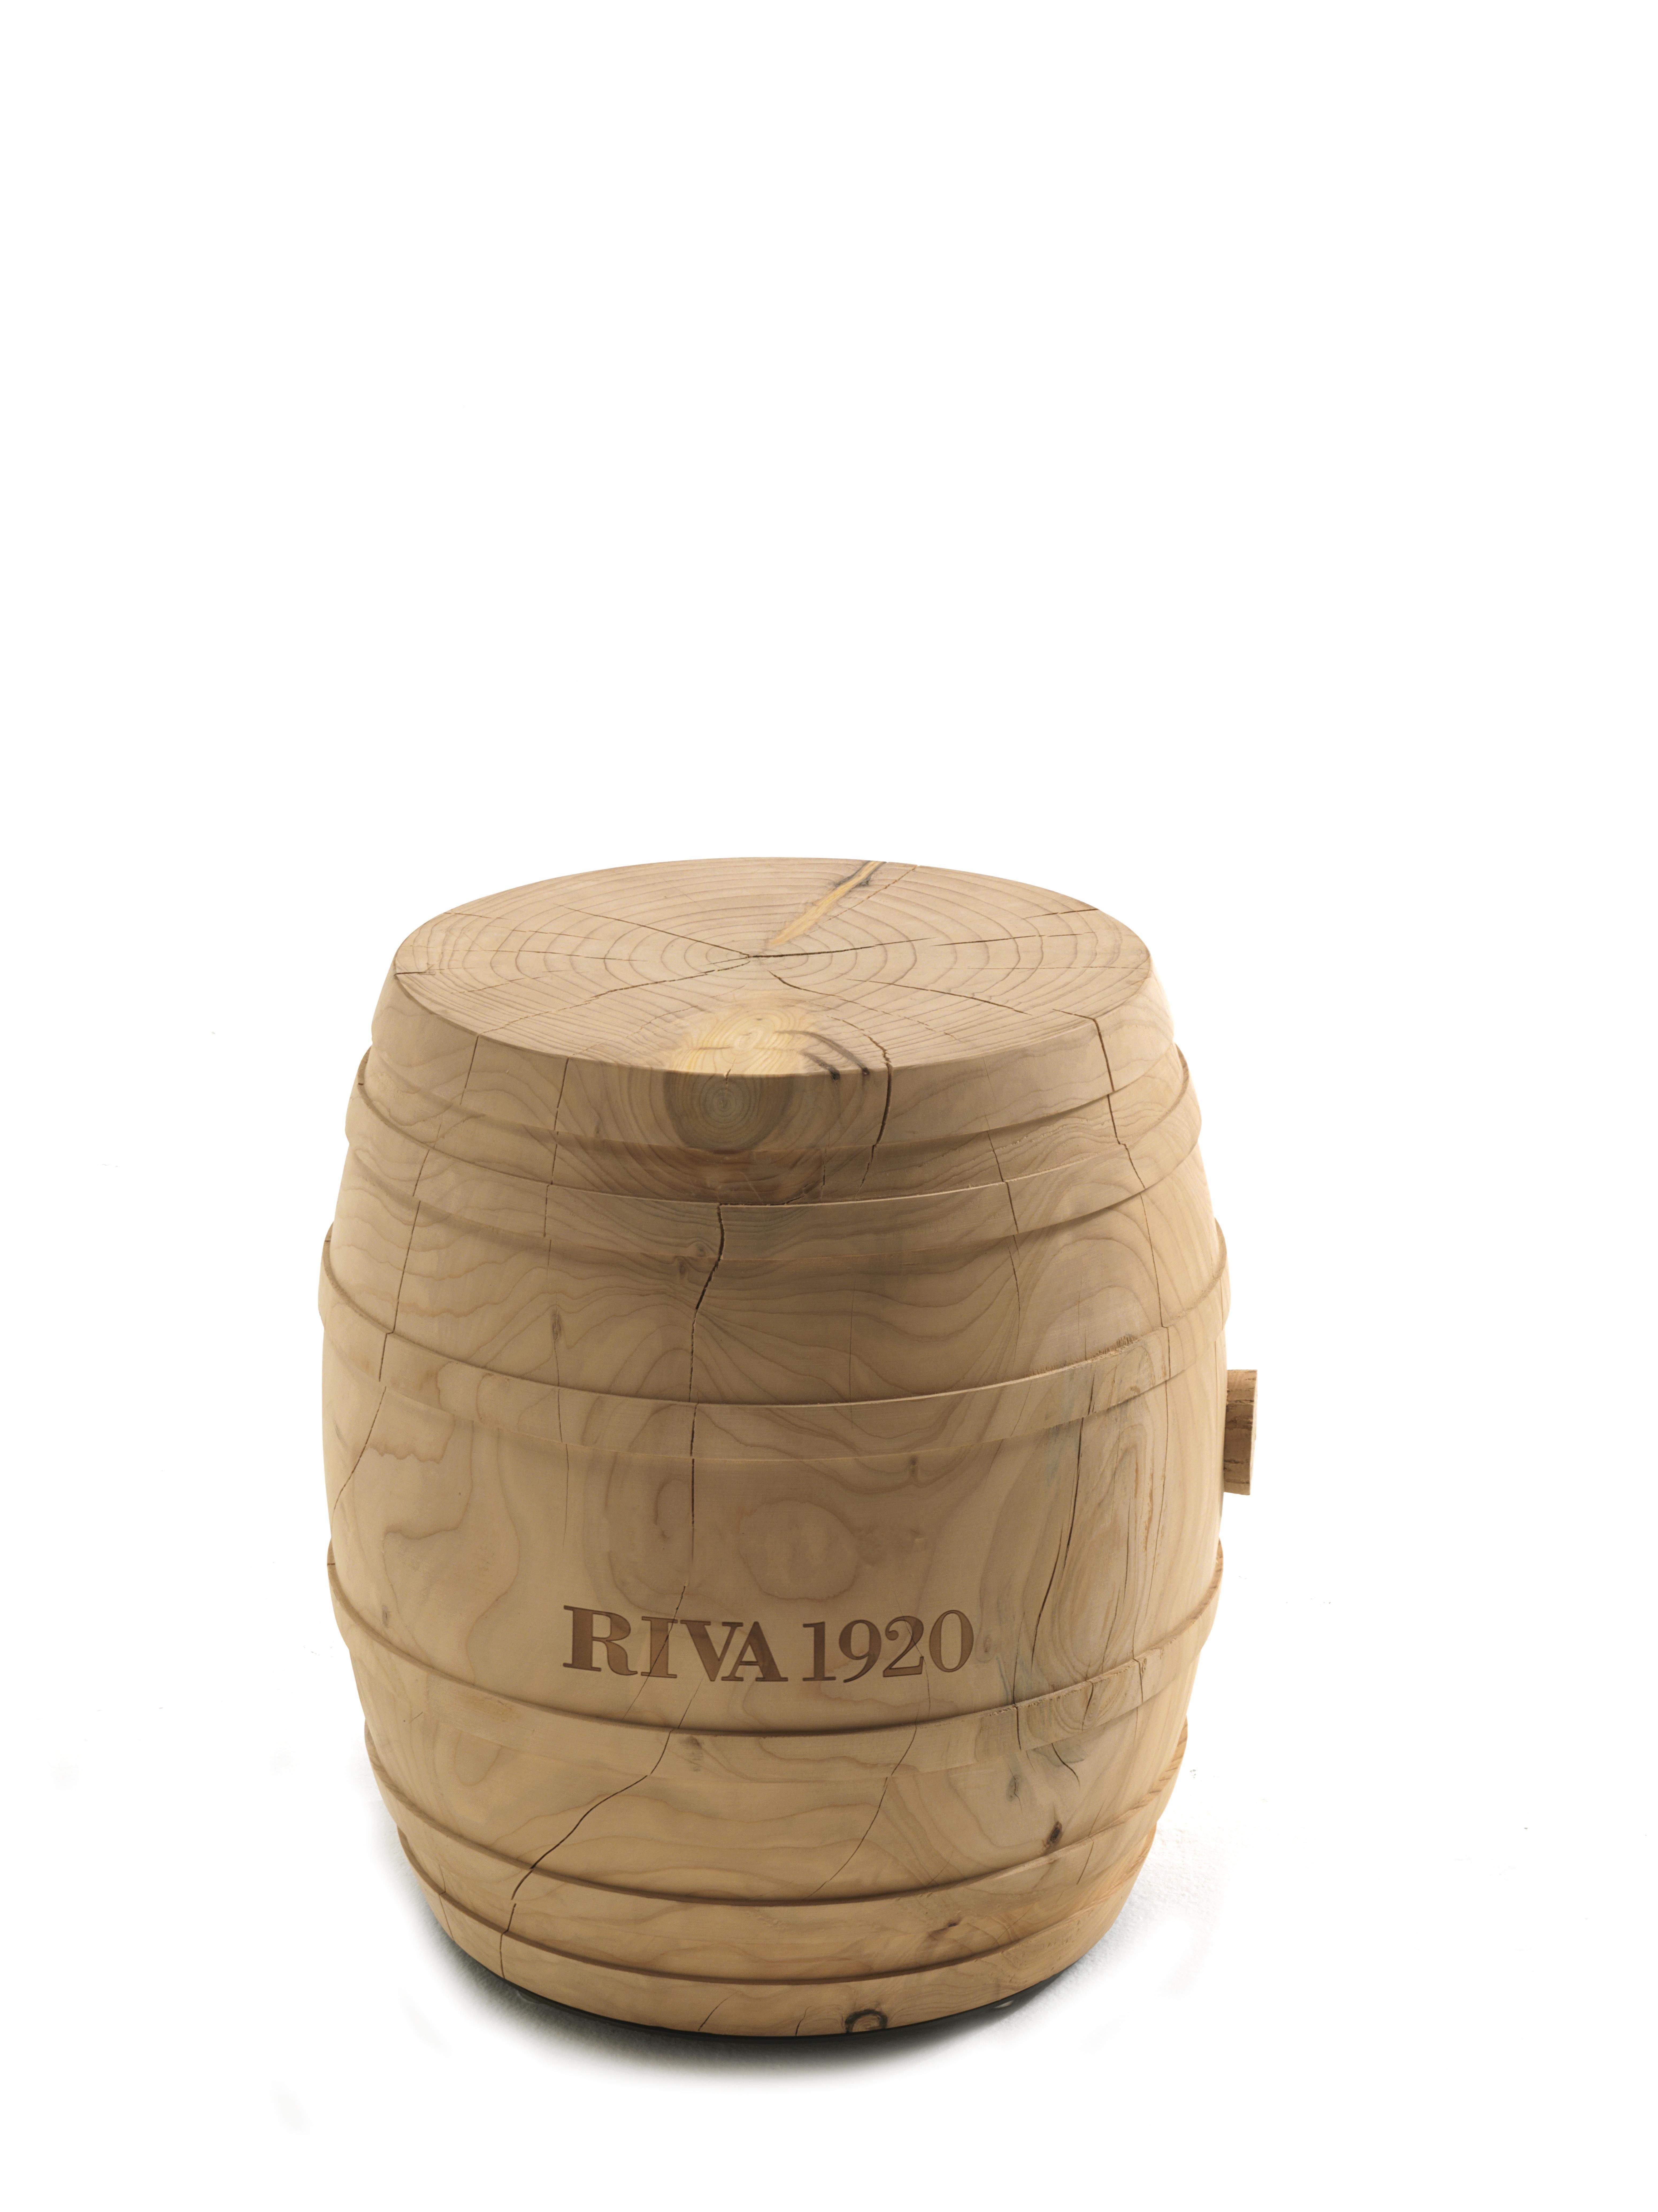 Botte Hocker C.R.&S. Riva1920 Zeitgenössischer naturbelassener Zedernholz, hergestellt in Italien Riva1920